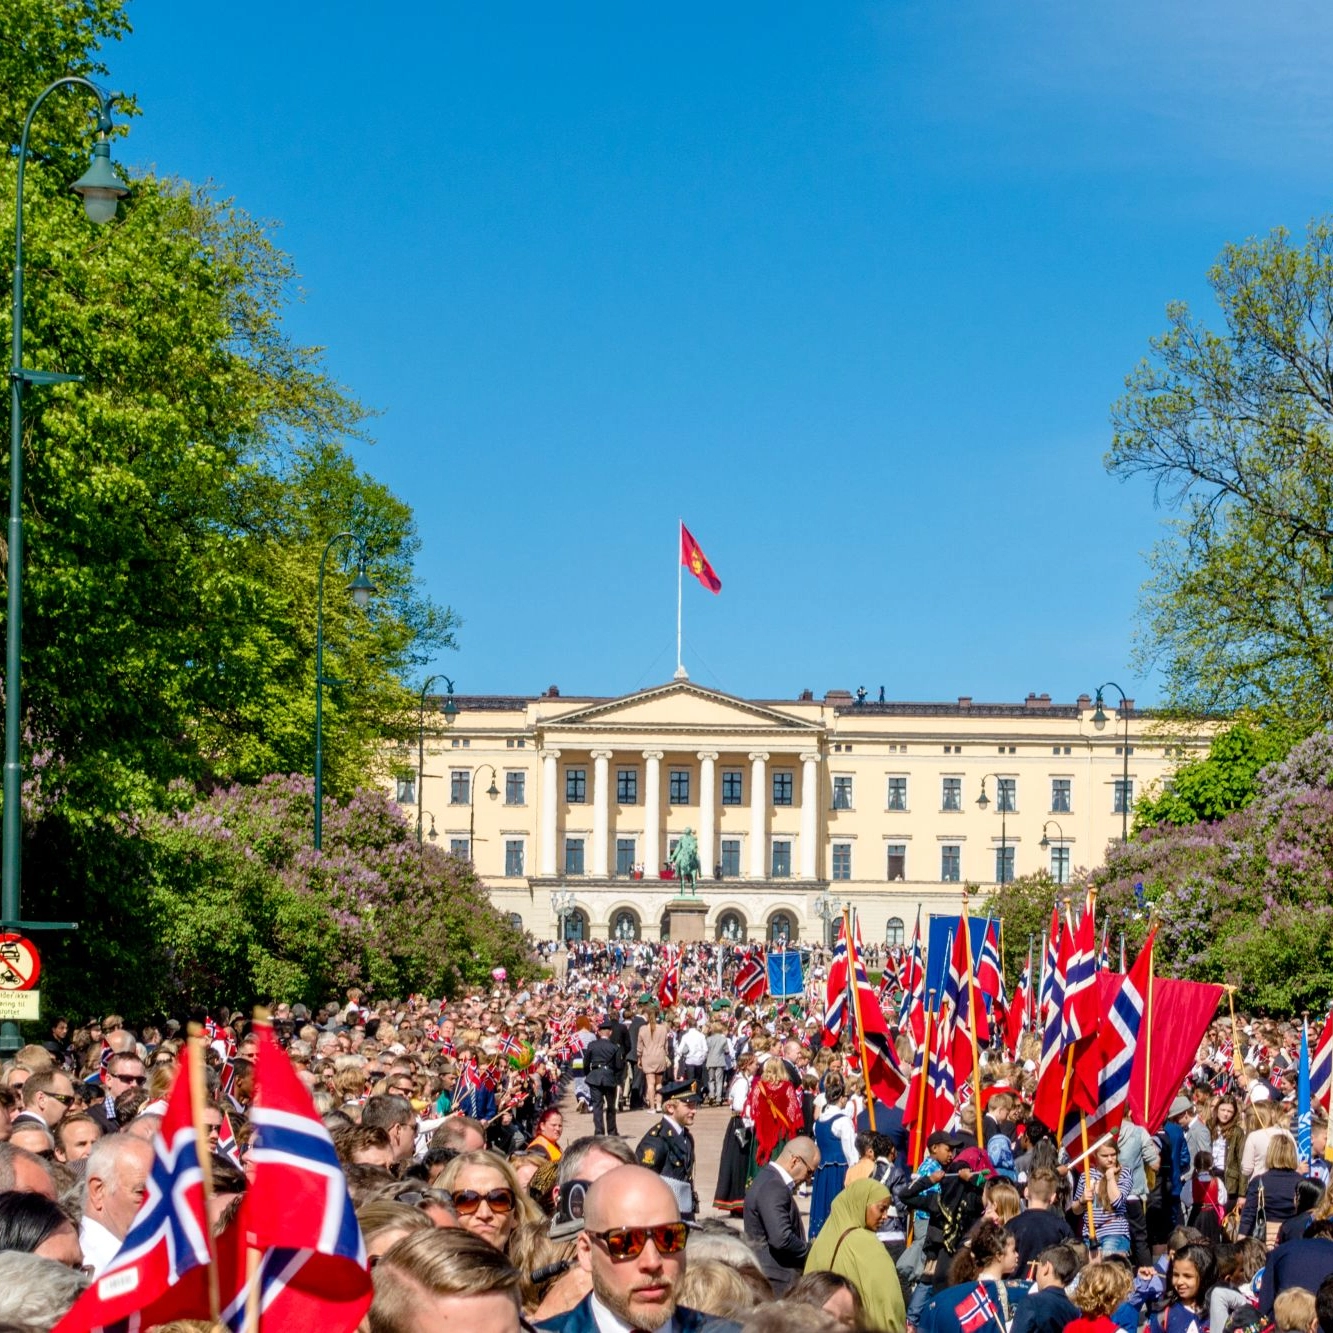 Norwegian National day in Oslo - 17.May in Norway